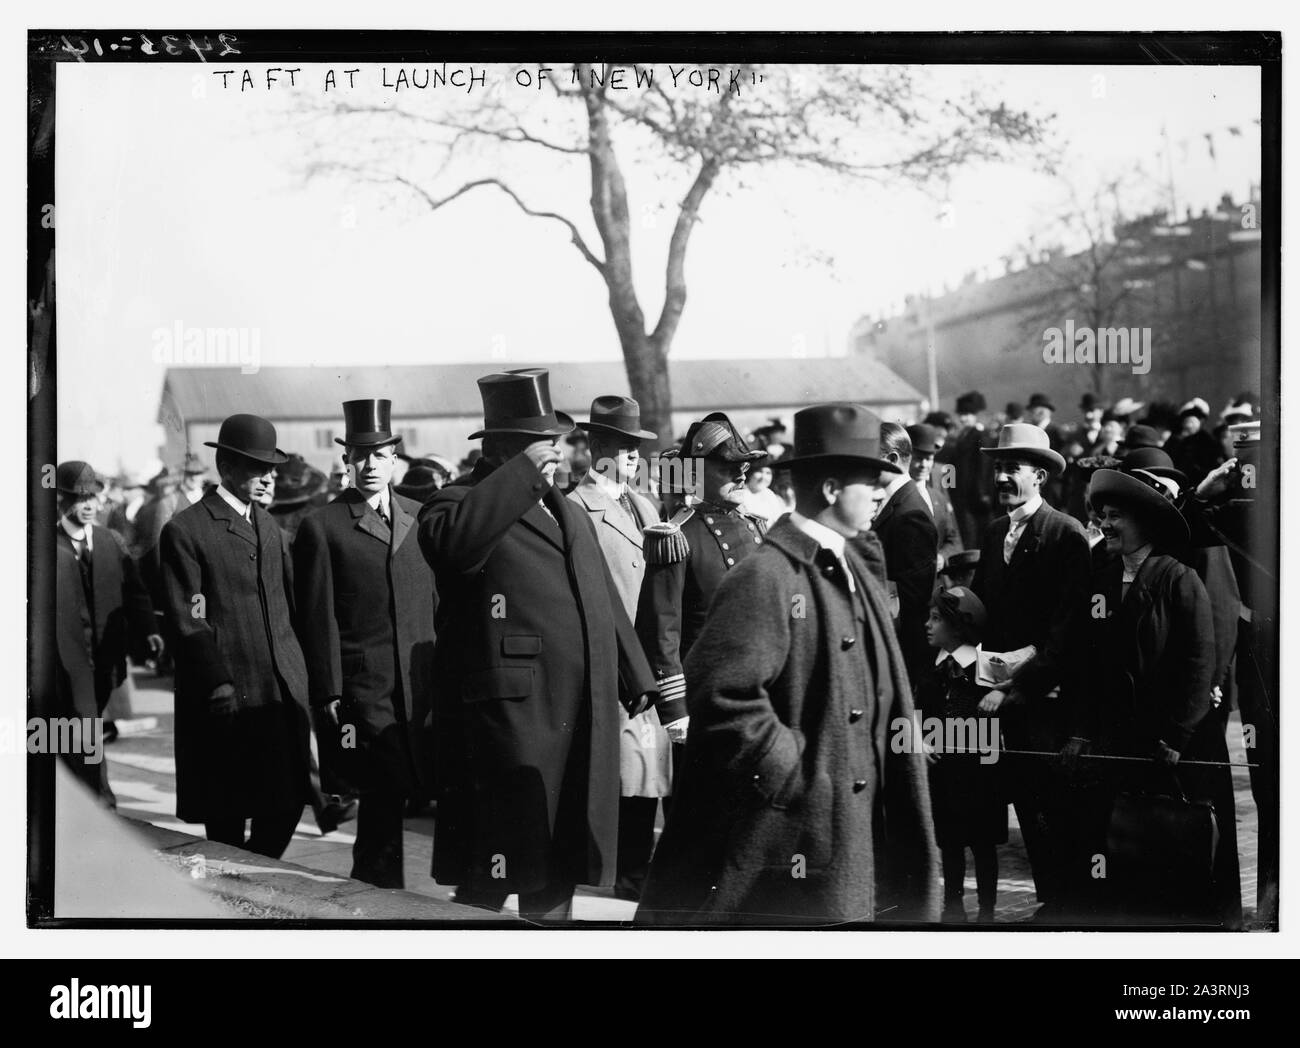 Taft at launch of NEW YORK Stock Photo